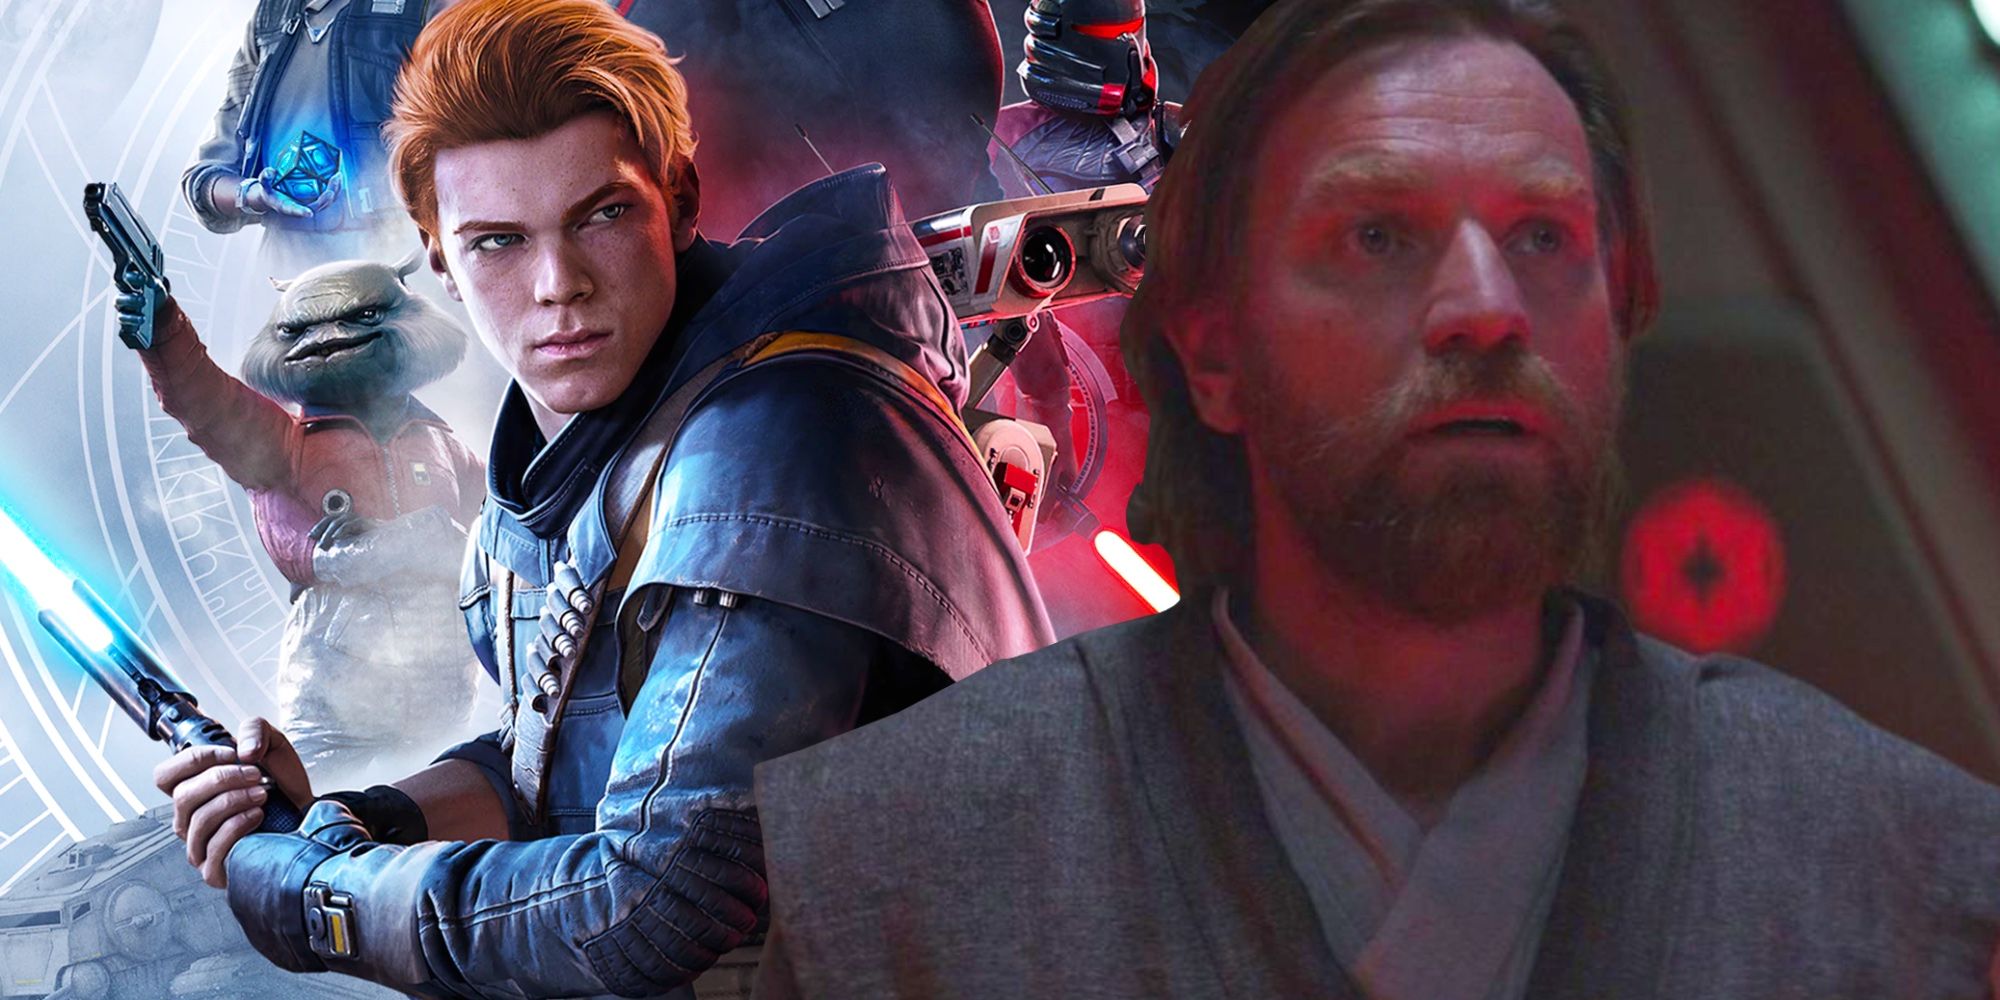 Obi-Wan Kenobi Episode 4 Copies 5 Things From Jedi- Fallen Order Featured